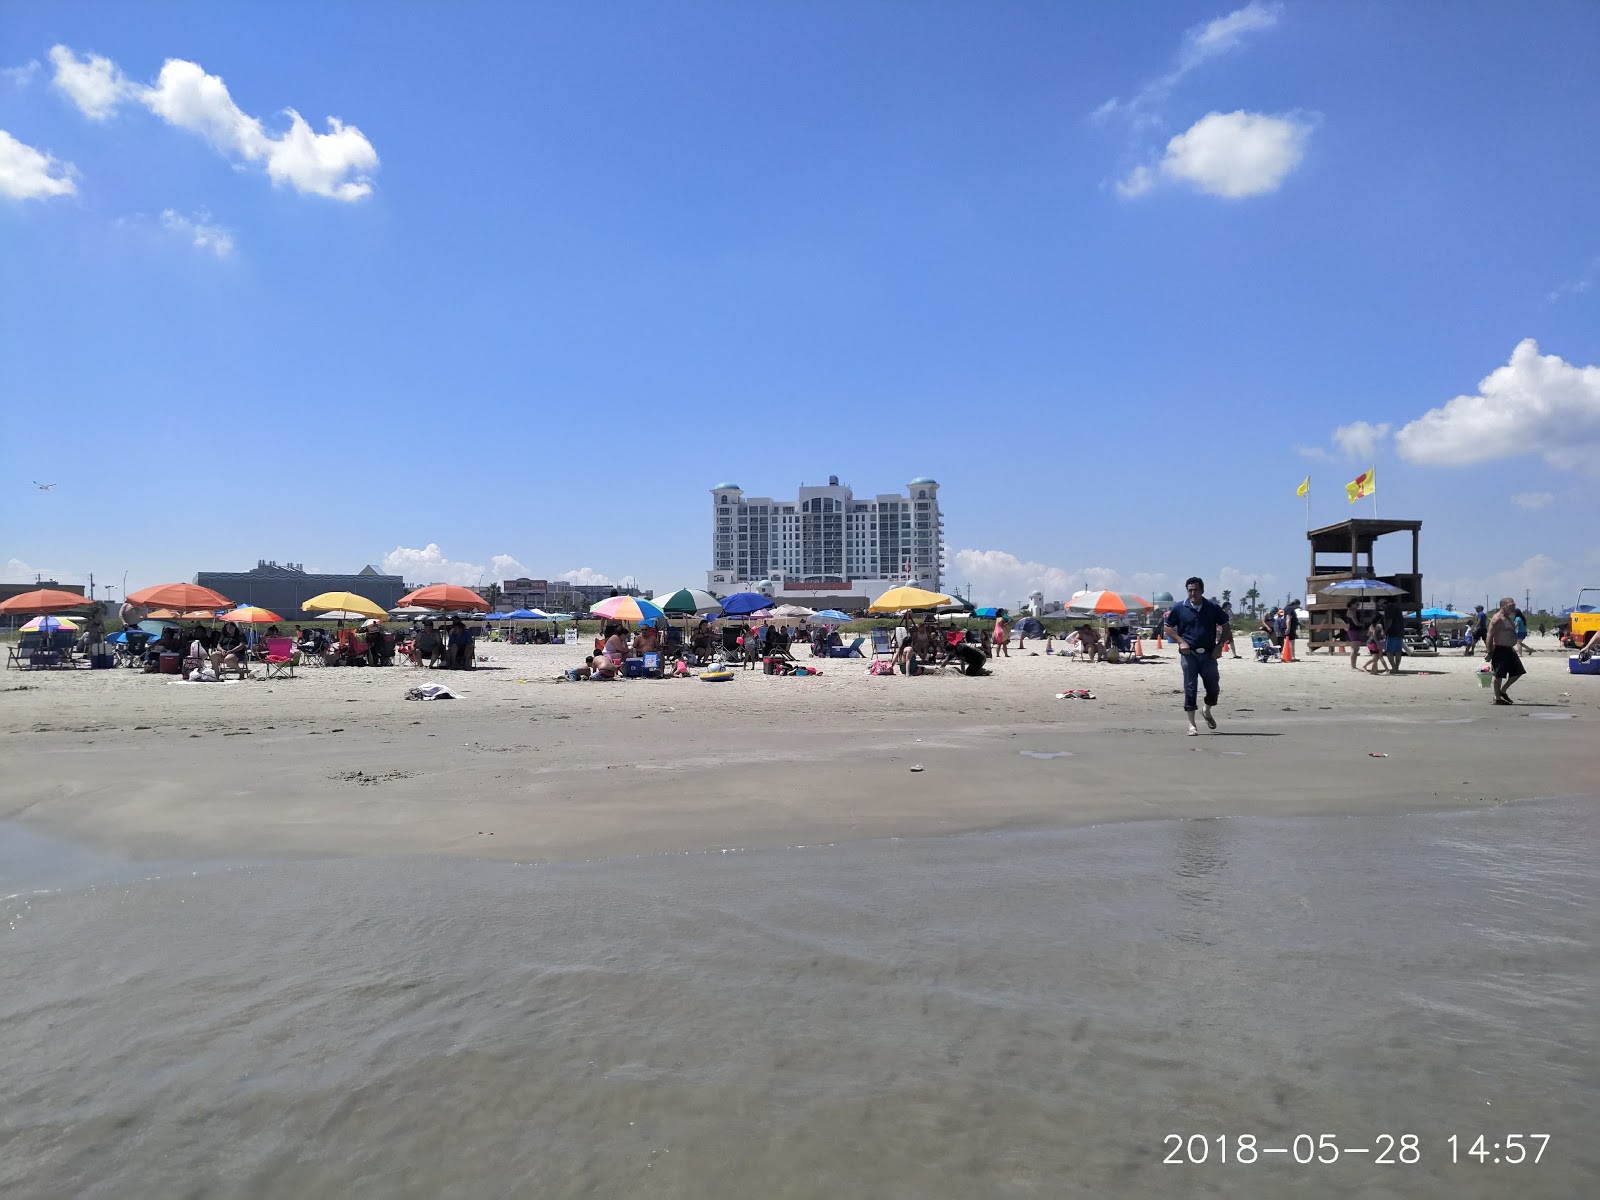 Foto de Stewart beach - lugar popular entre os apreciadores de relaxamento